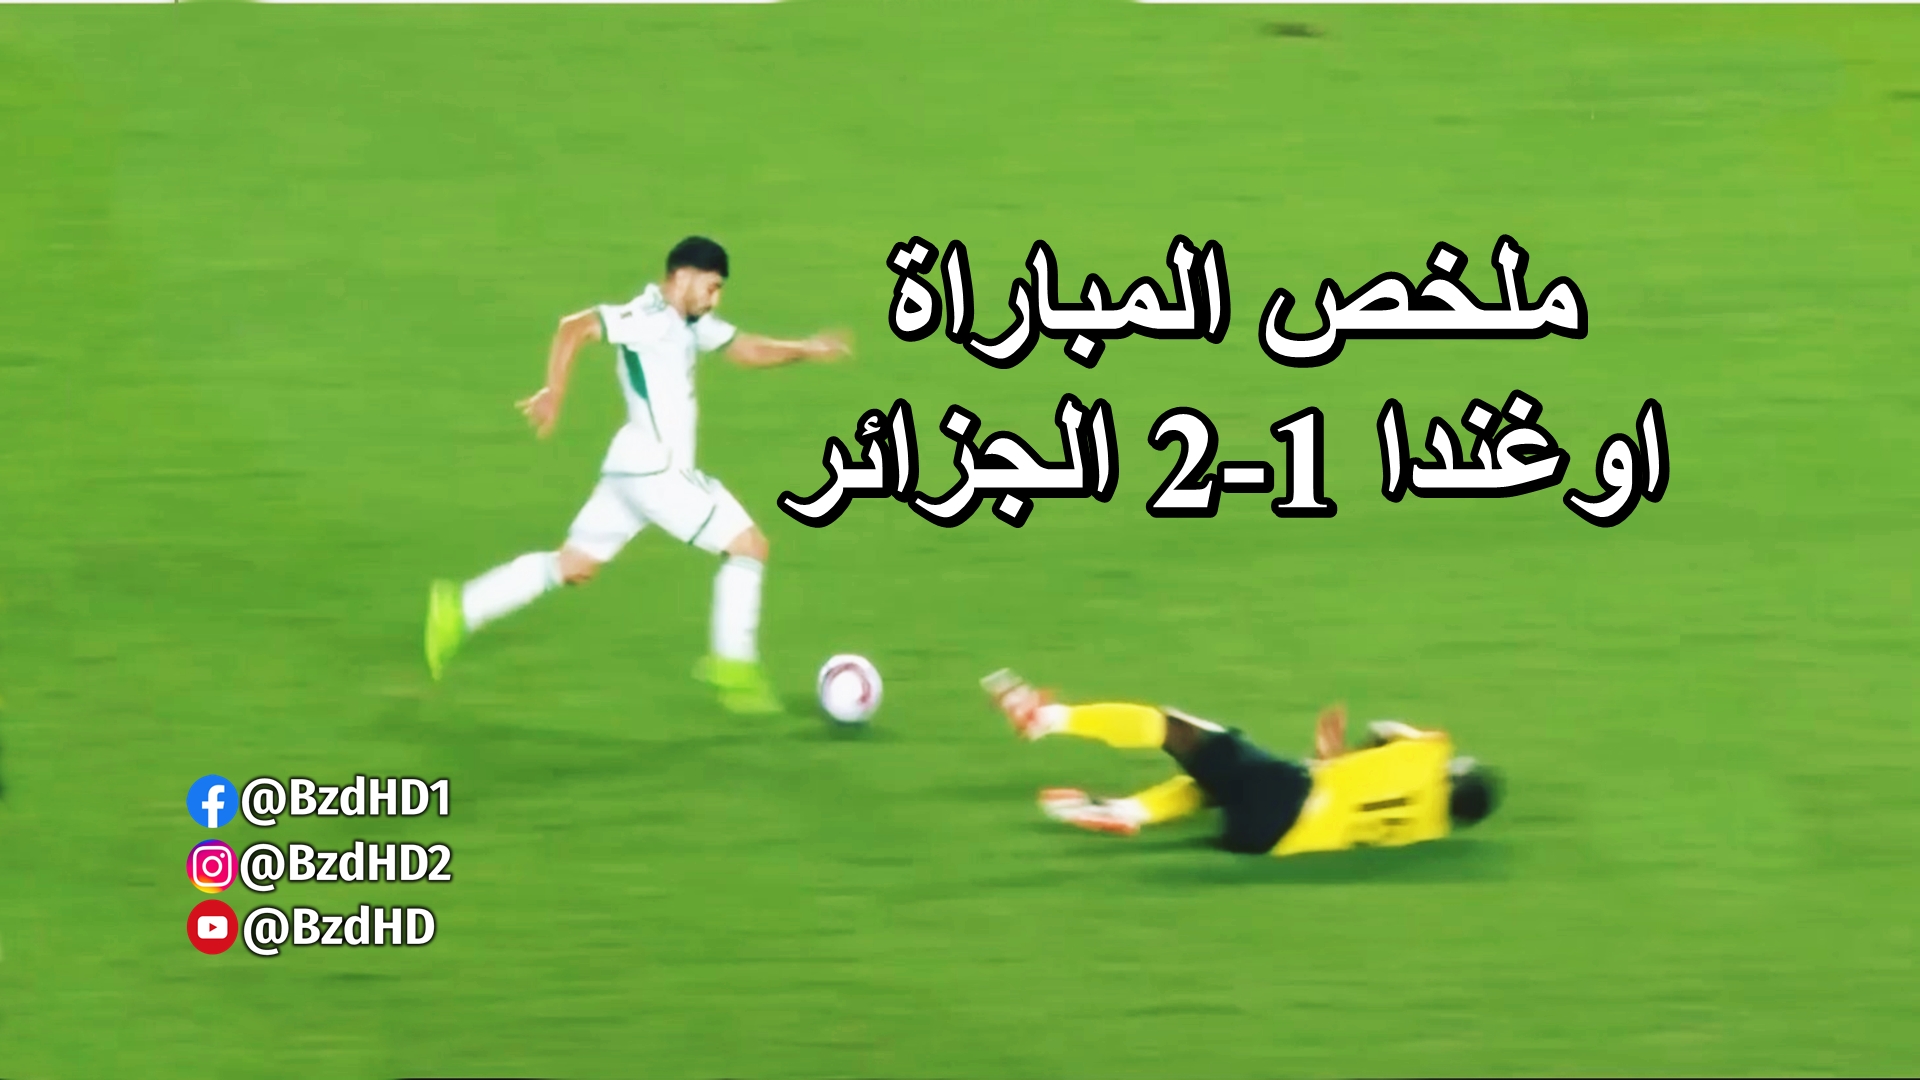 شاهد ملخص مبارة الجزائر واوغندا 2-1 - اهداف مباراة الجزائر 11